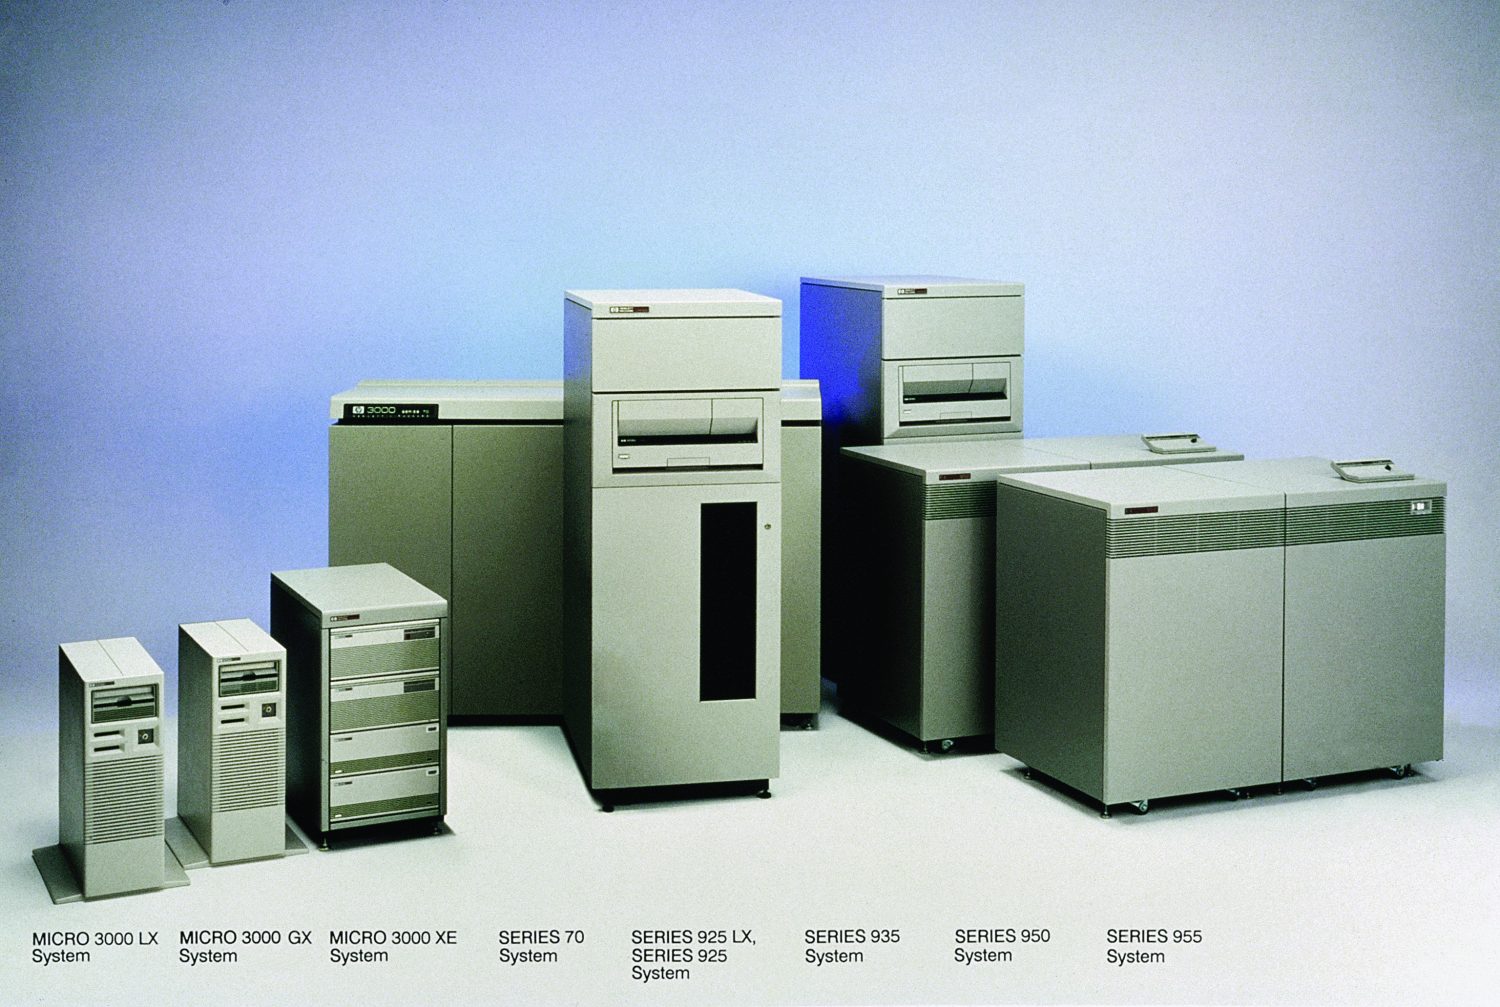 HP 3000 line (L to R): Micro3000 LX, Micro3000 GX, Micro3000 XE, Series 70, Series 925 LX, Series 935, Series 950, Series 955.